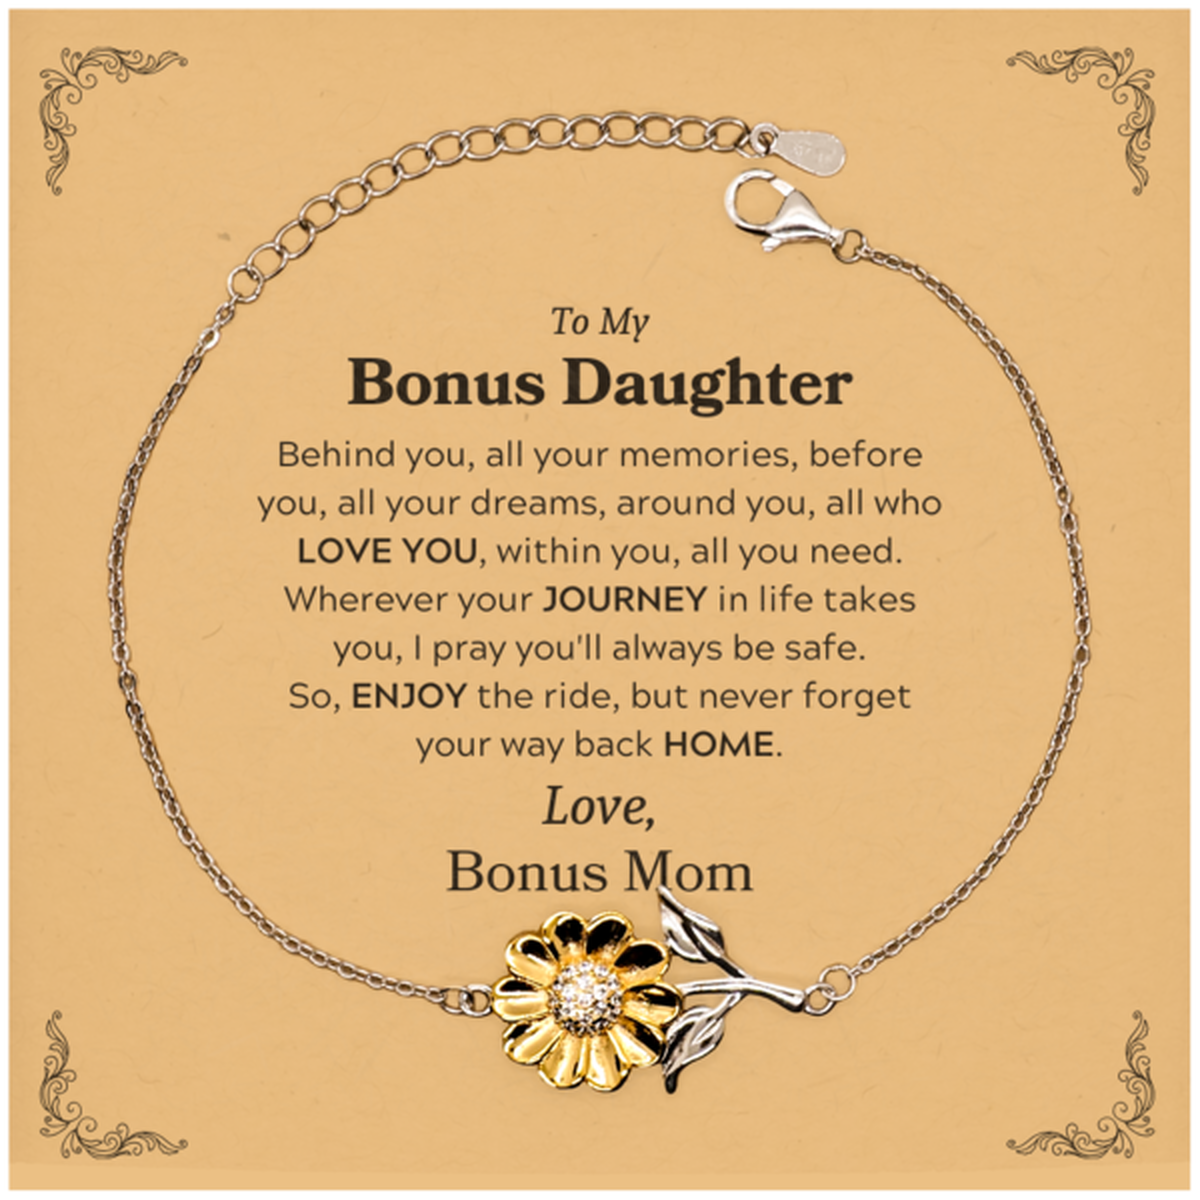 To My Bonus Daughter Graduation Gifts from Bonus Mom, Bonus Daughter Sunflower Bracelet Christmas Birthday Gifts for Bonus Daughter Behind you, all your memories, before you, all your dreams. Love, Bonus Mom